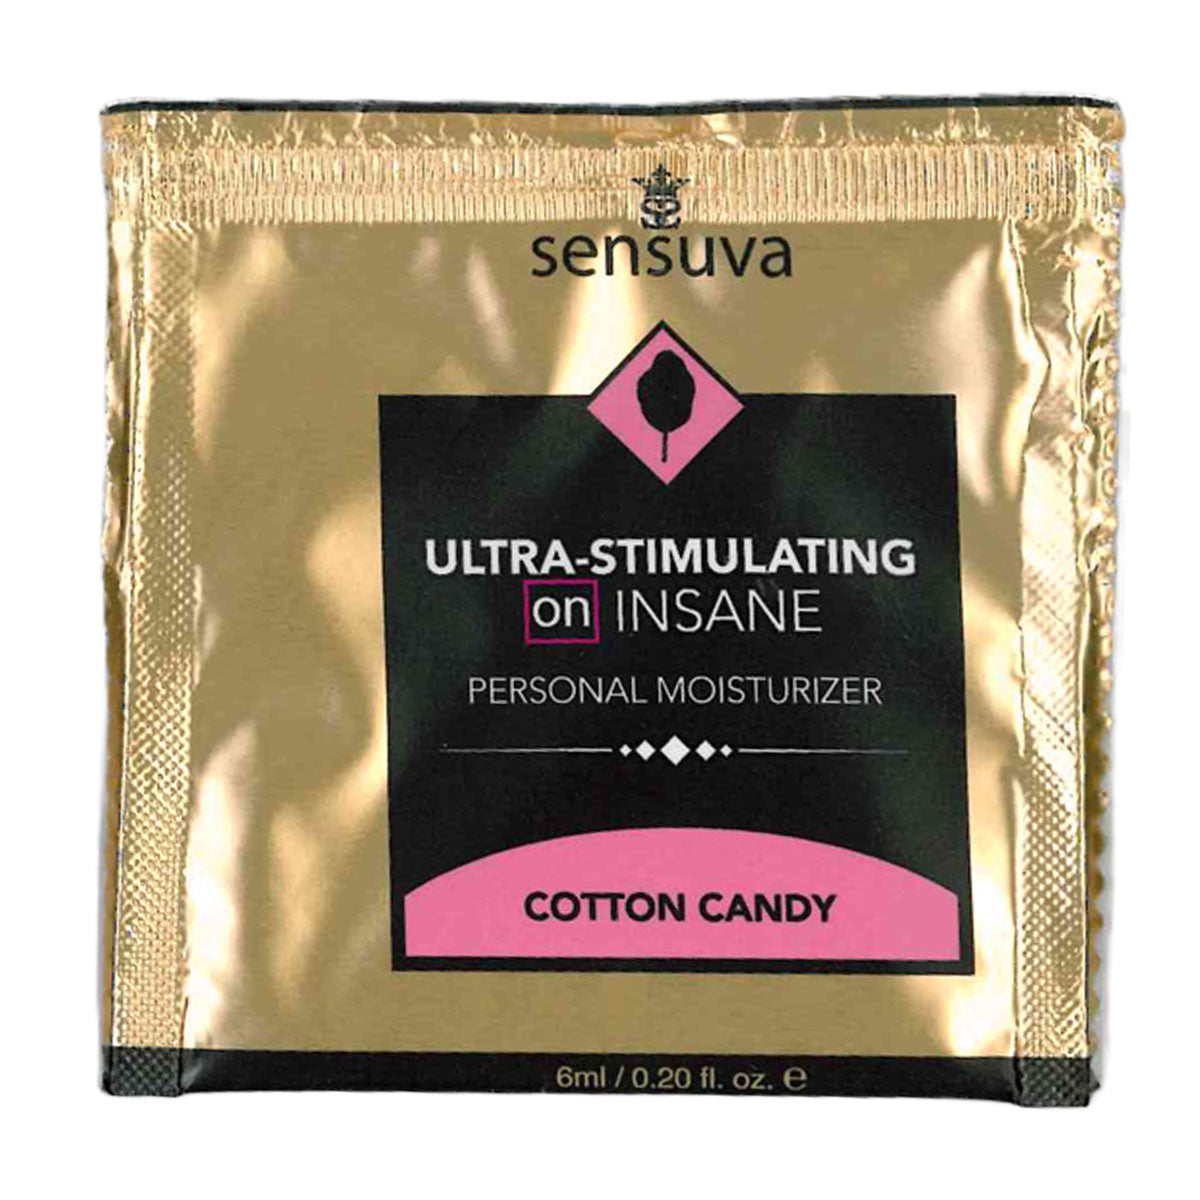 Sensuva – Ultra-Stimulating ON INSANE - Cotton Candy - Foil 6ml/0.20 fl oz.